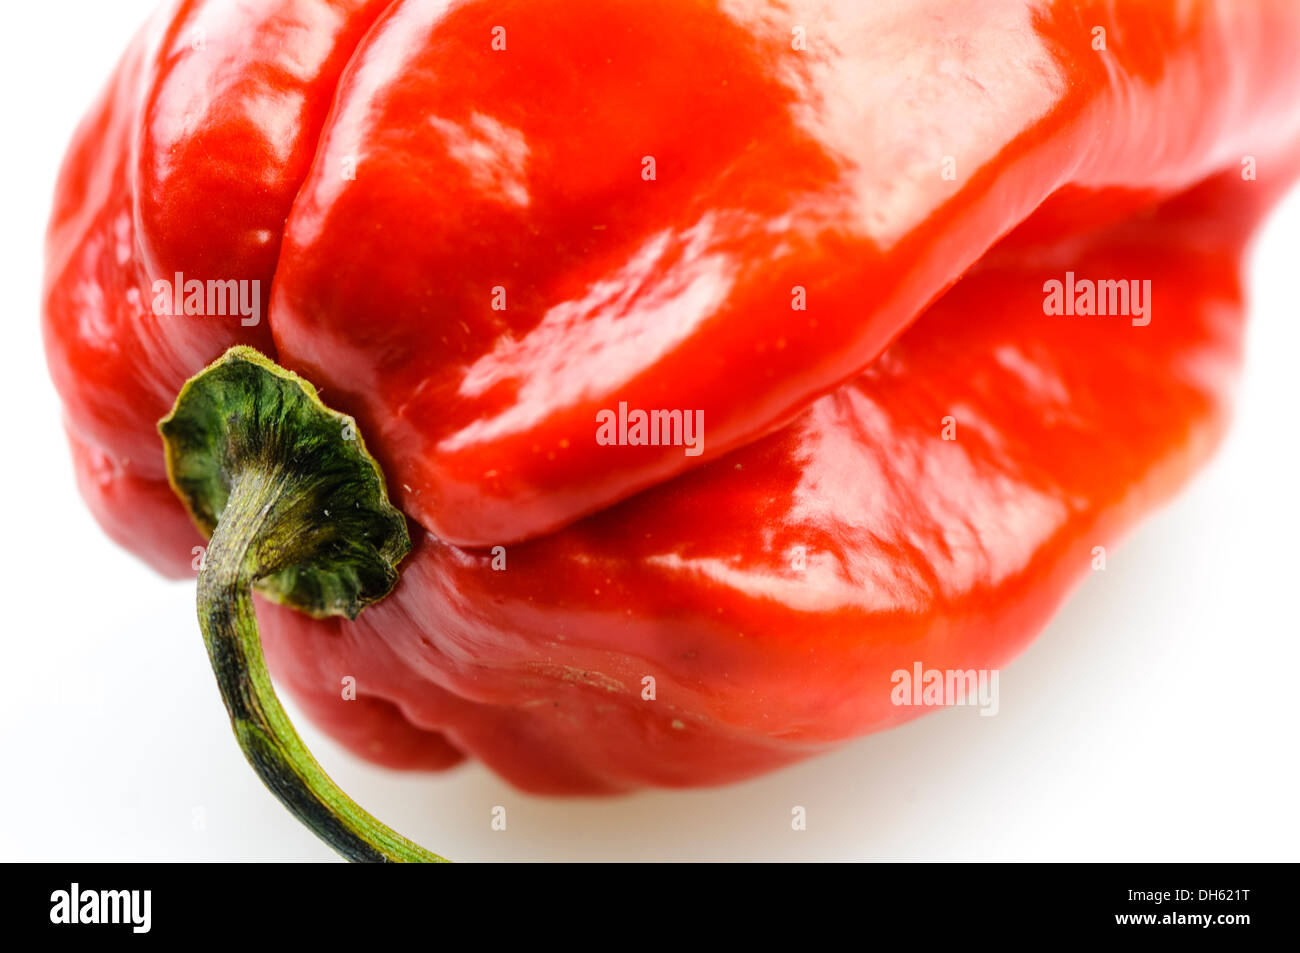 A scotch bonnet chili pepper Stock Photo